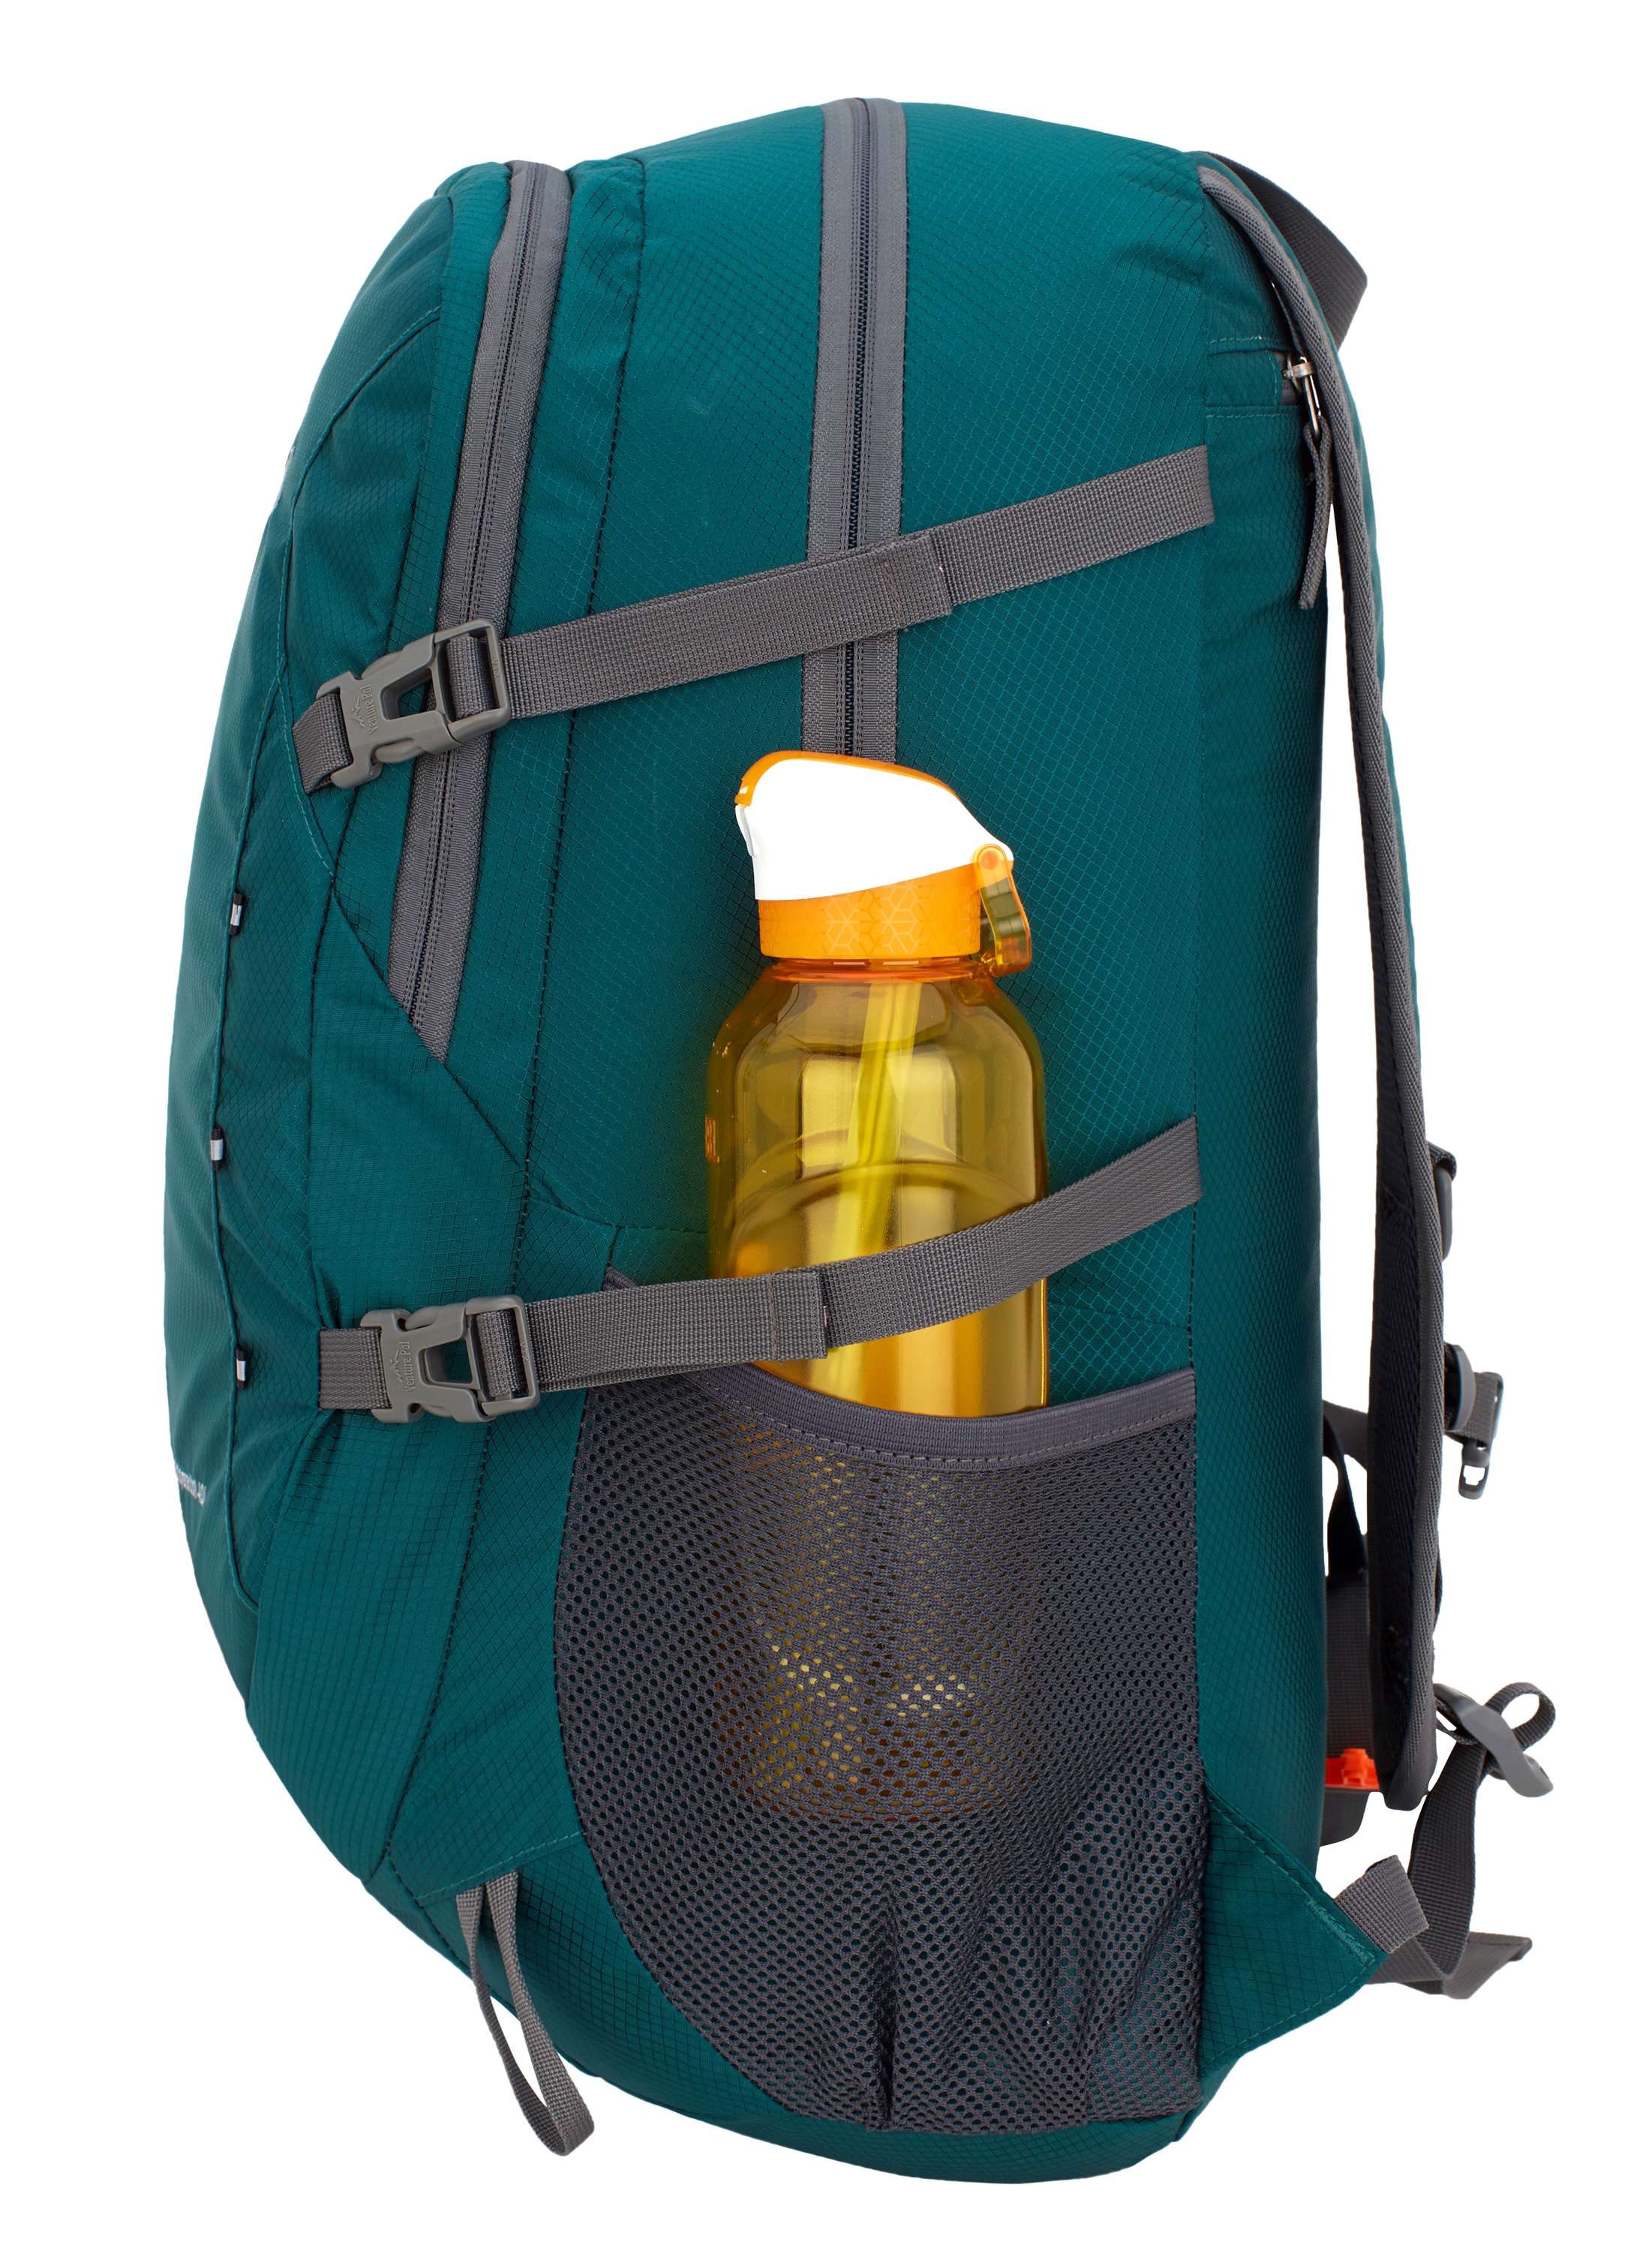 Venture Pal 40L Lightweight Packable Travel Hiking Backpack - image 2 of 7